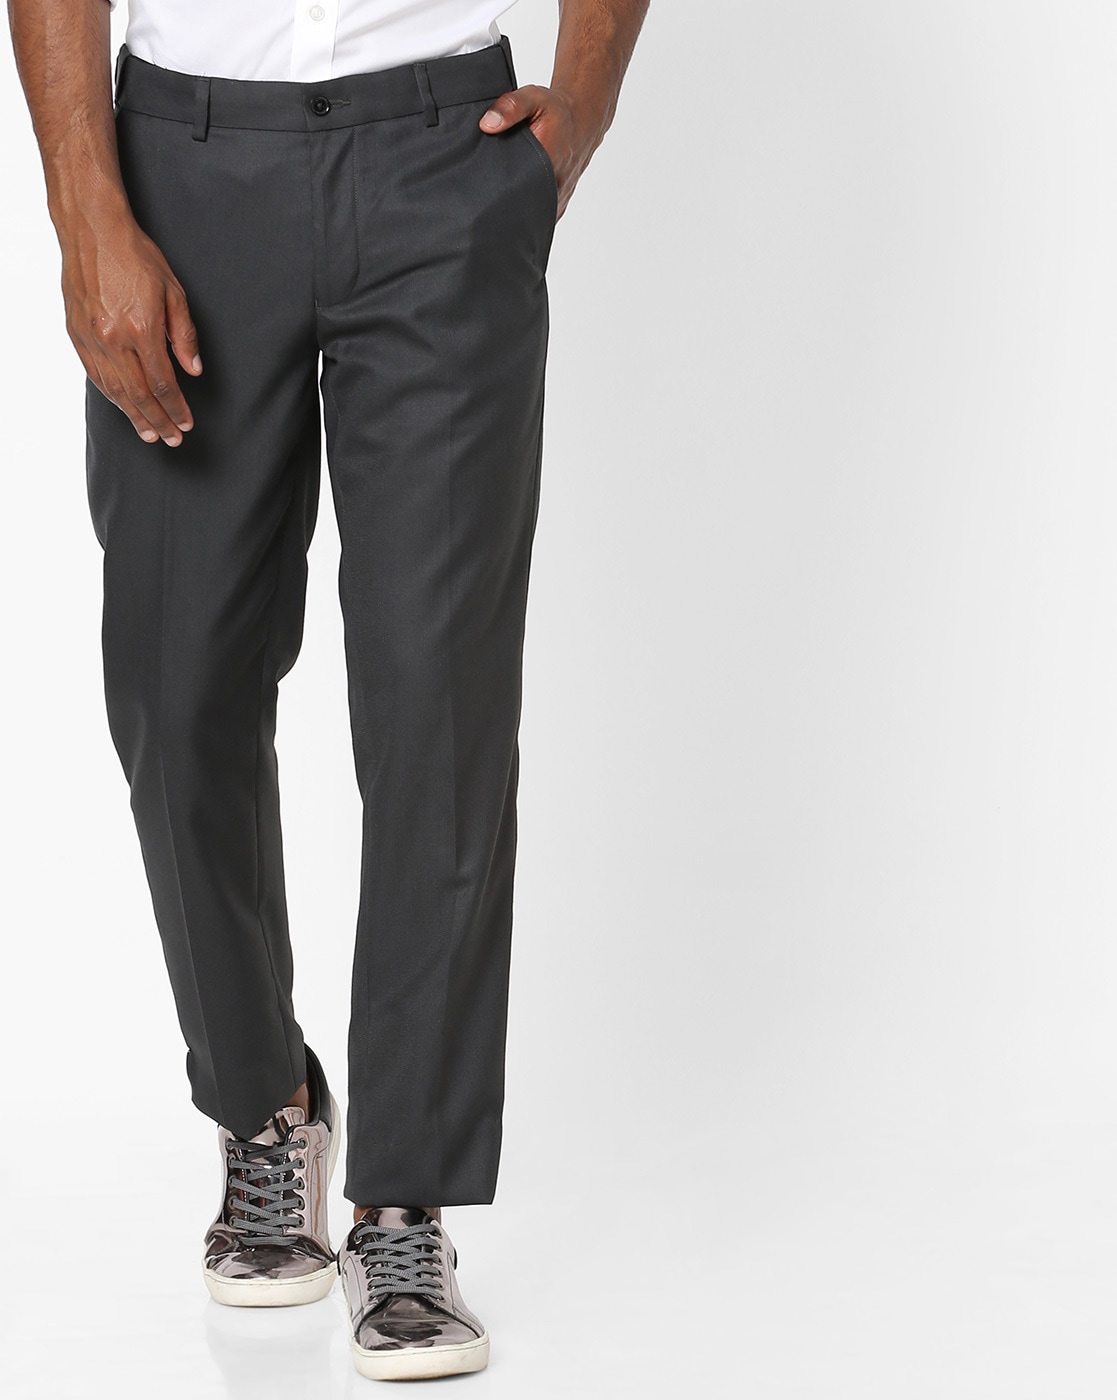 Mariano Rubinacci - Limited edition dark grey flannel trousers-vachngandaiphat.com.vn